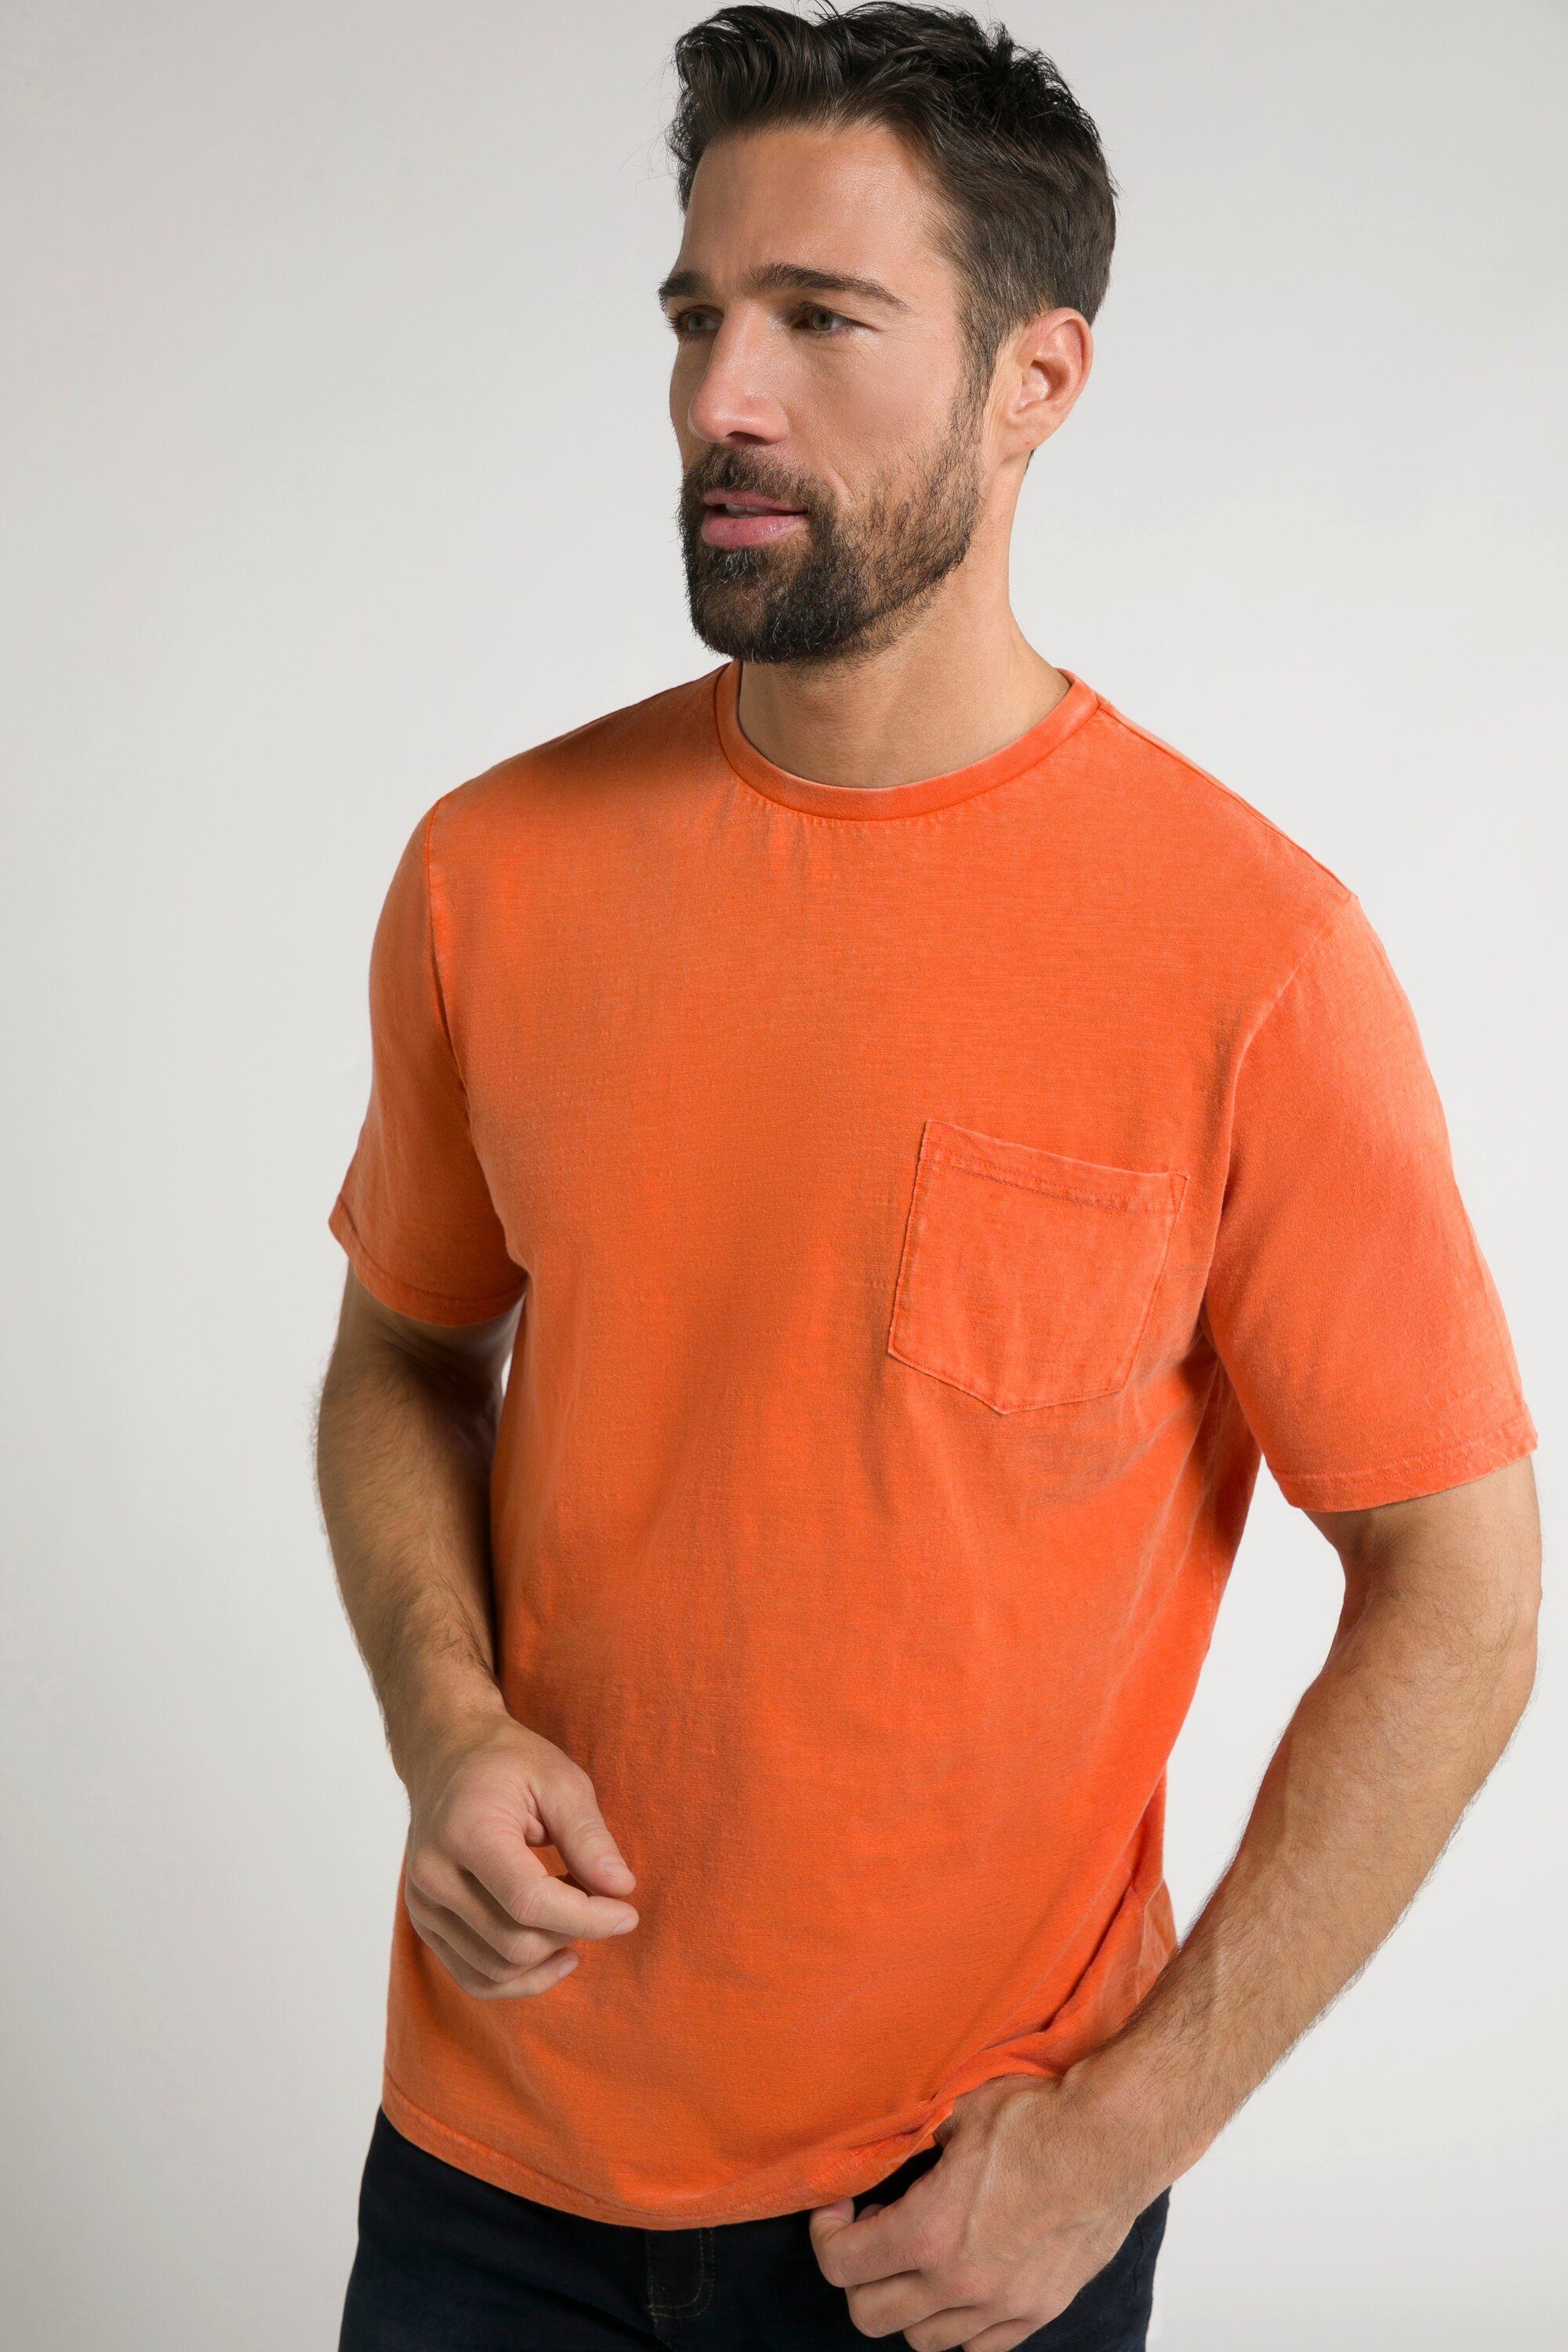 Flammjersey JP1880 Halbarm T-Shirt orange T-Shirt Look Vintage